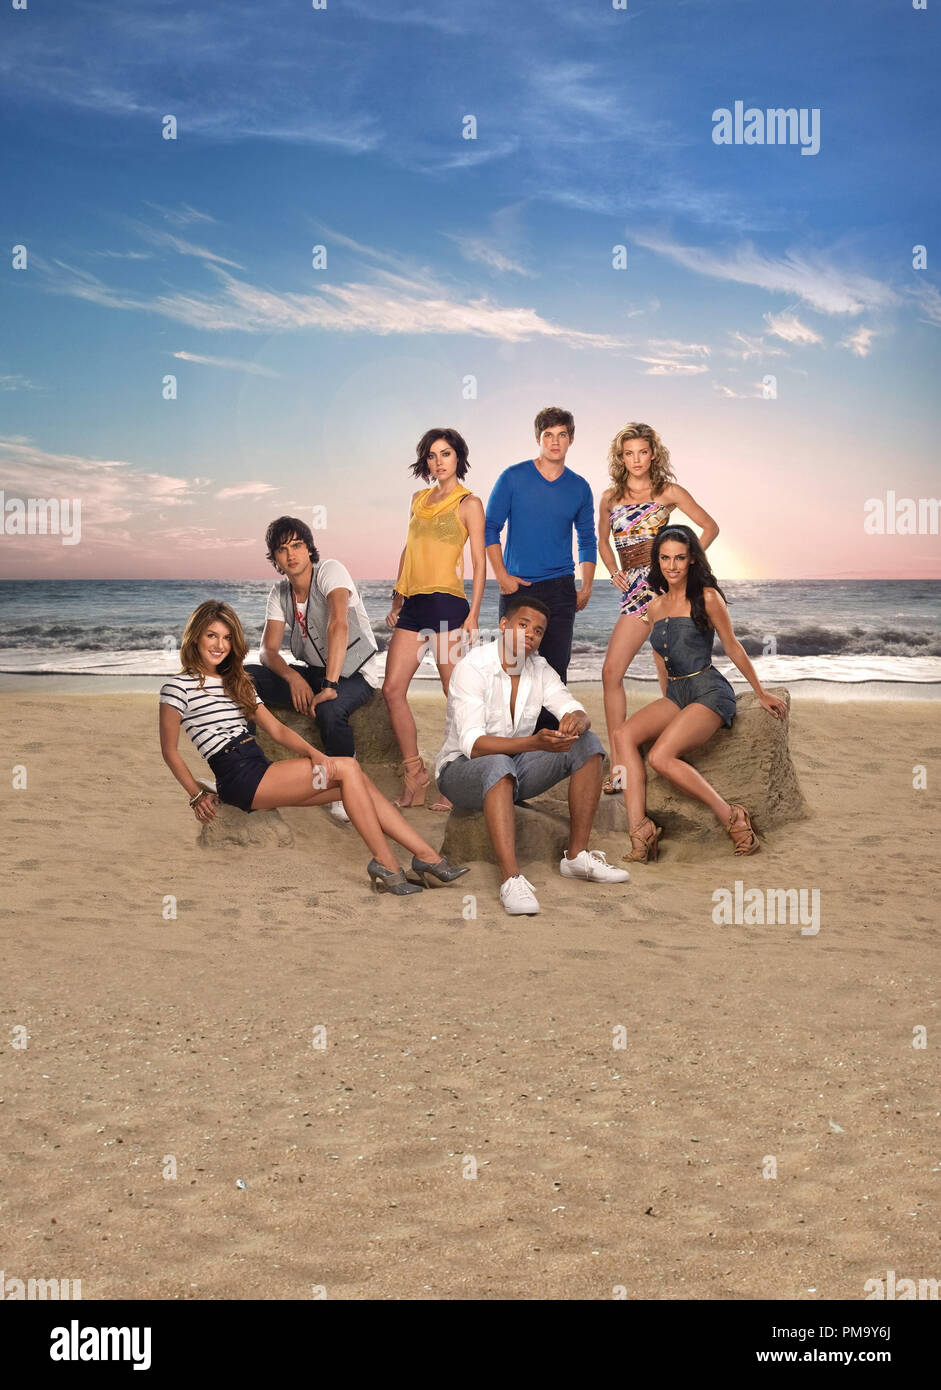 '90210' de temporada 2 (2009- 2010) elenco Shenae Grimes, AnnaLynne McCord, Jessica Stroup y Jessica Lowndes Foto de stock